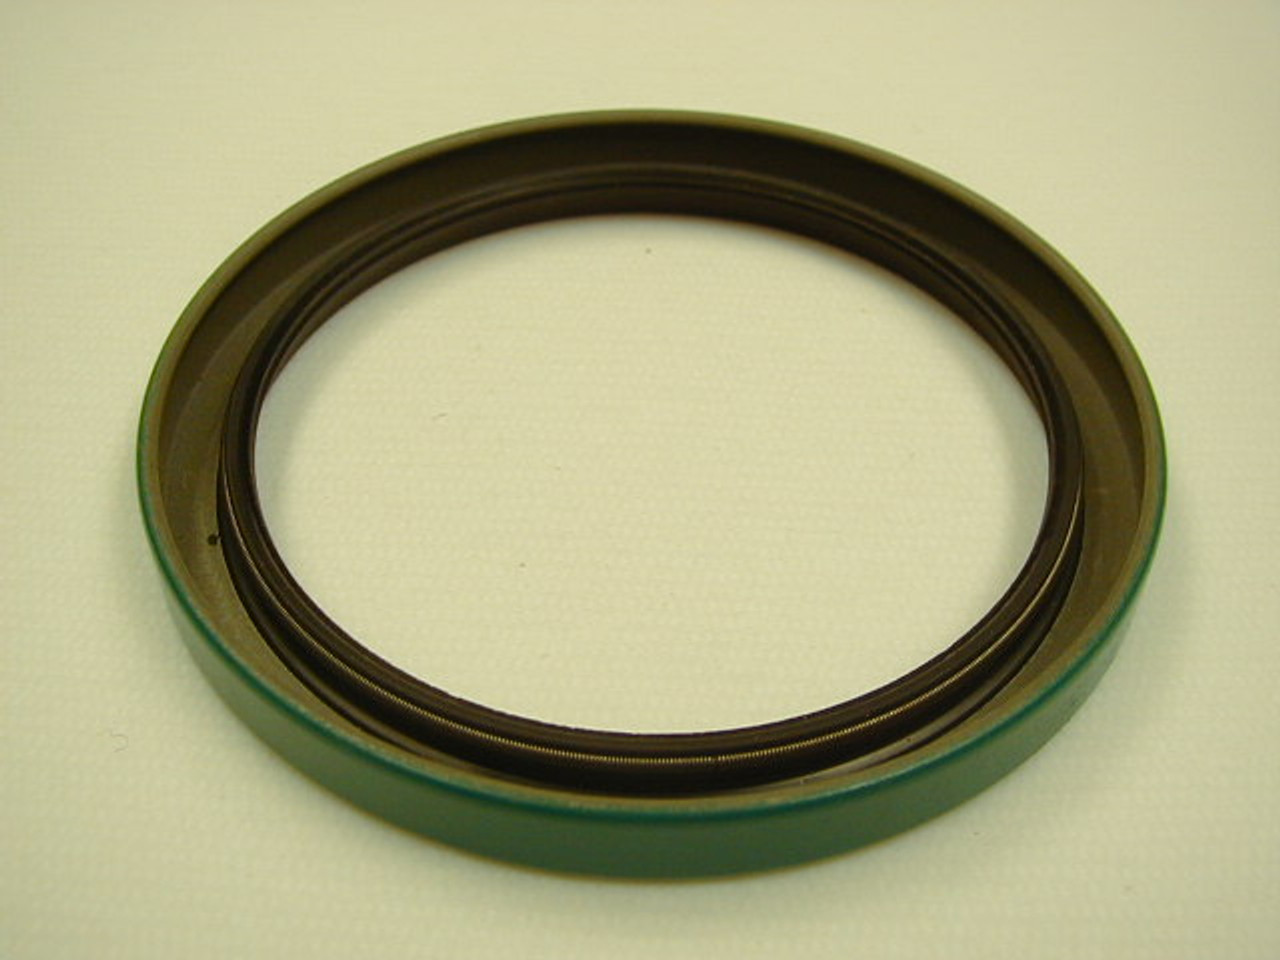 1.00" (25.4mm) Inch Metal Single Lip Nitrile Oil Seal  9822 CRW1 R